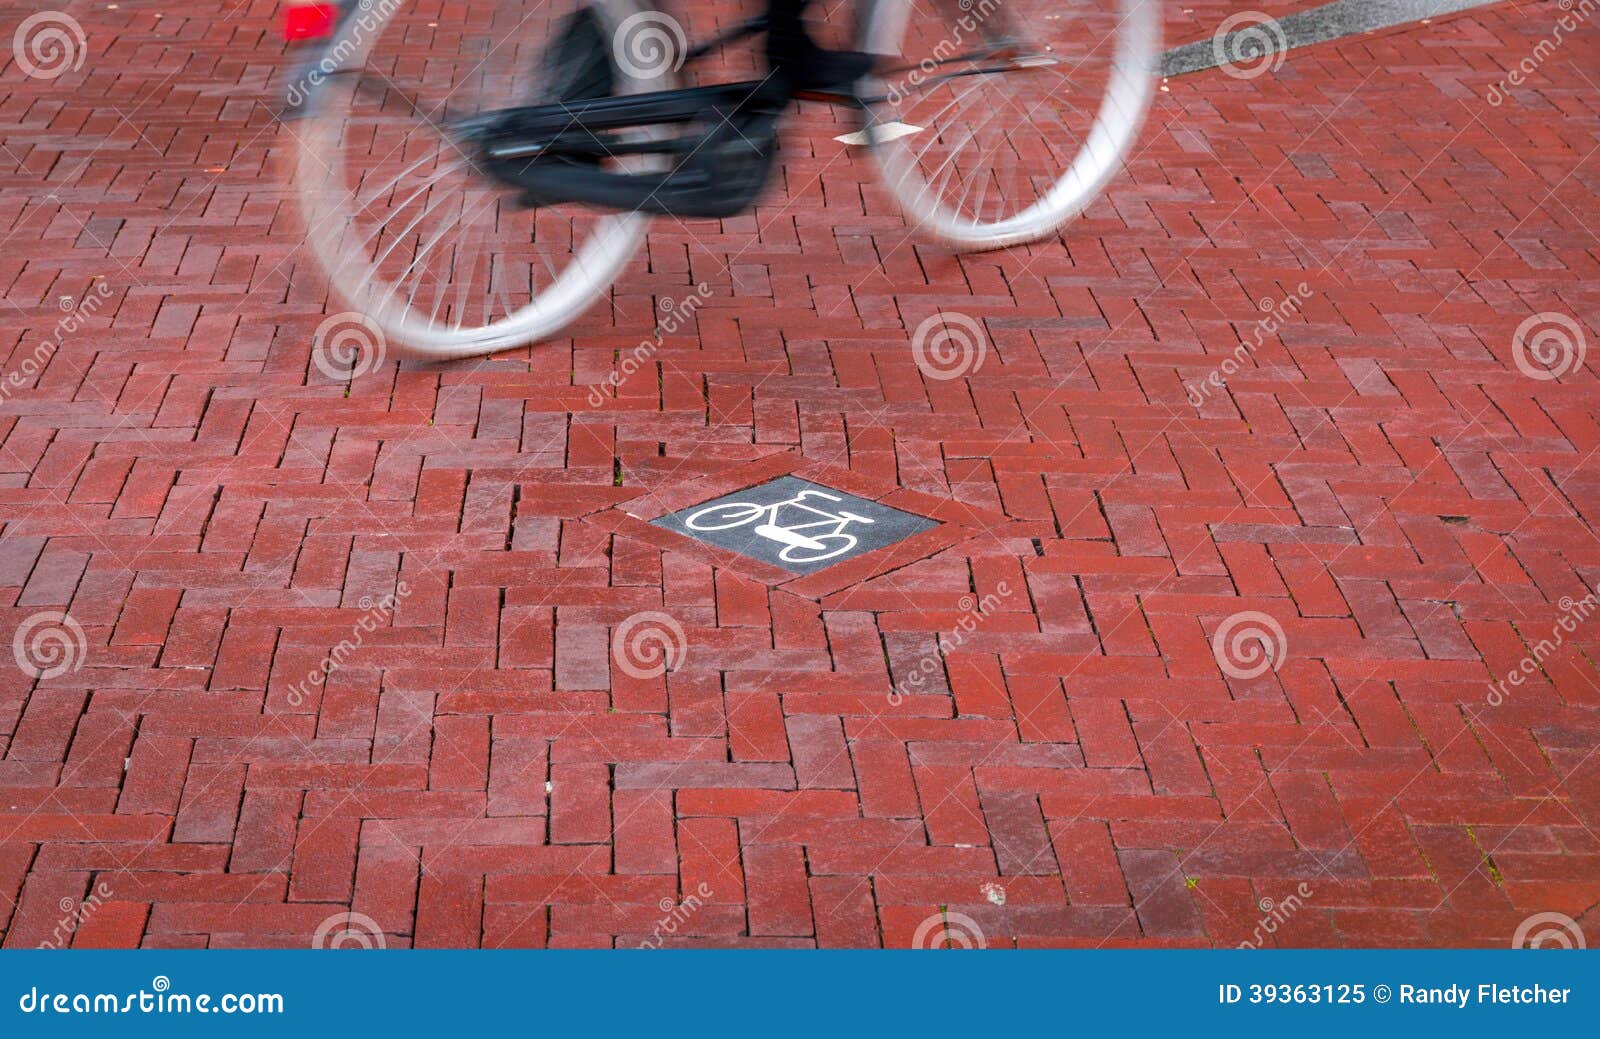 Biking in Europe stock image. Image of cycle, sport, europe - 39363125